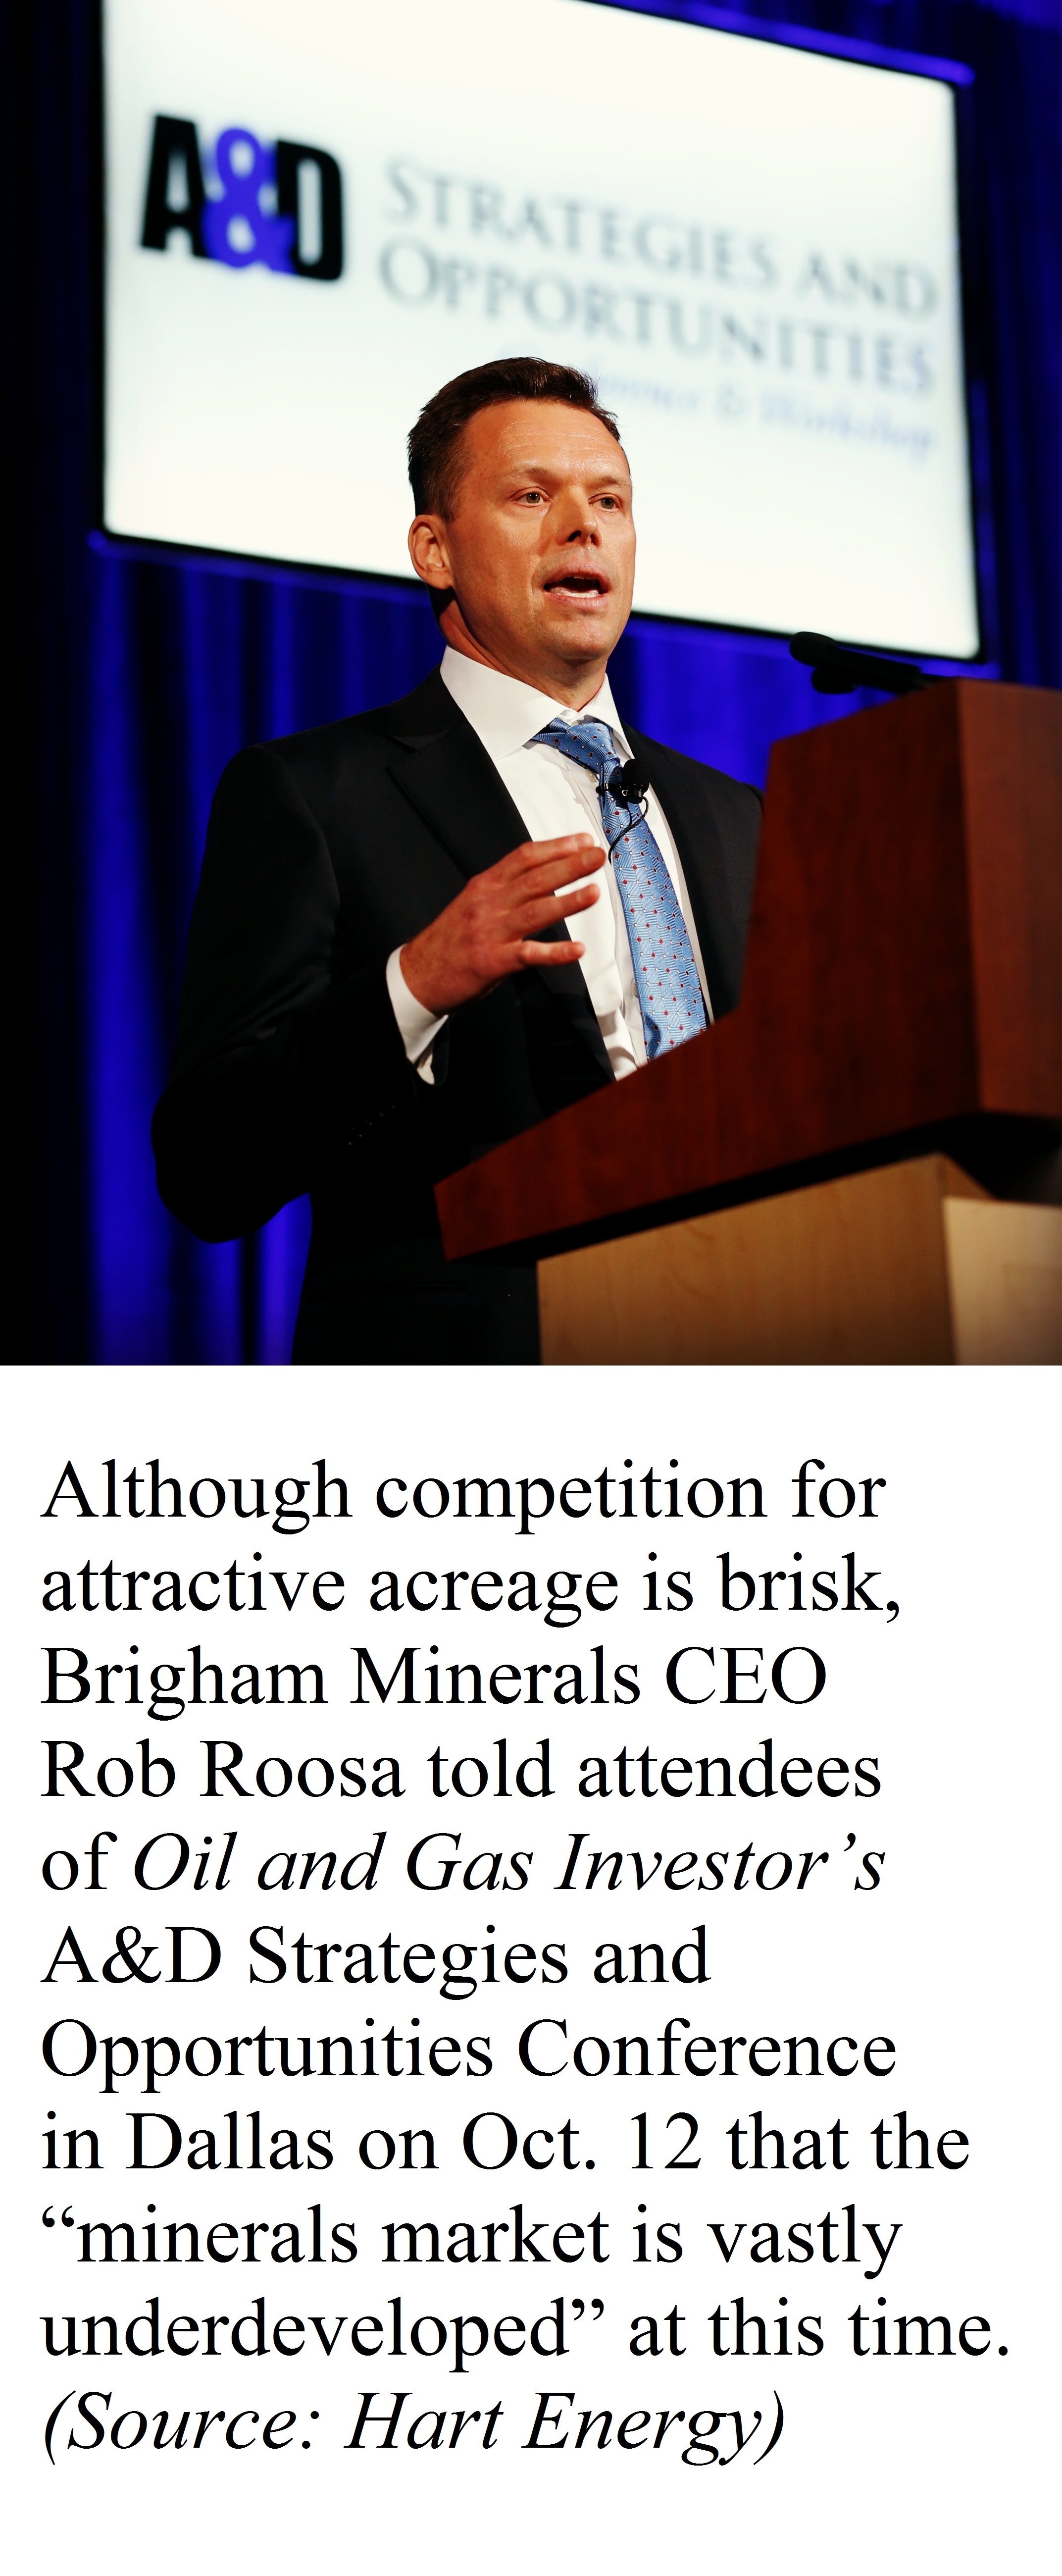 Brigham Minerals CEO Rob Roosa